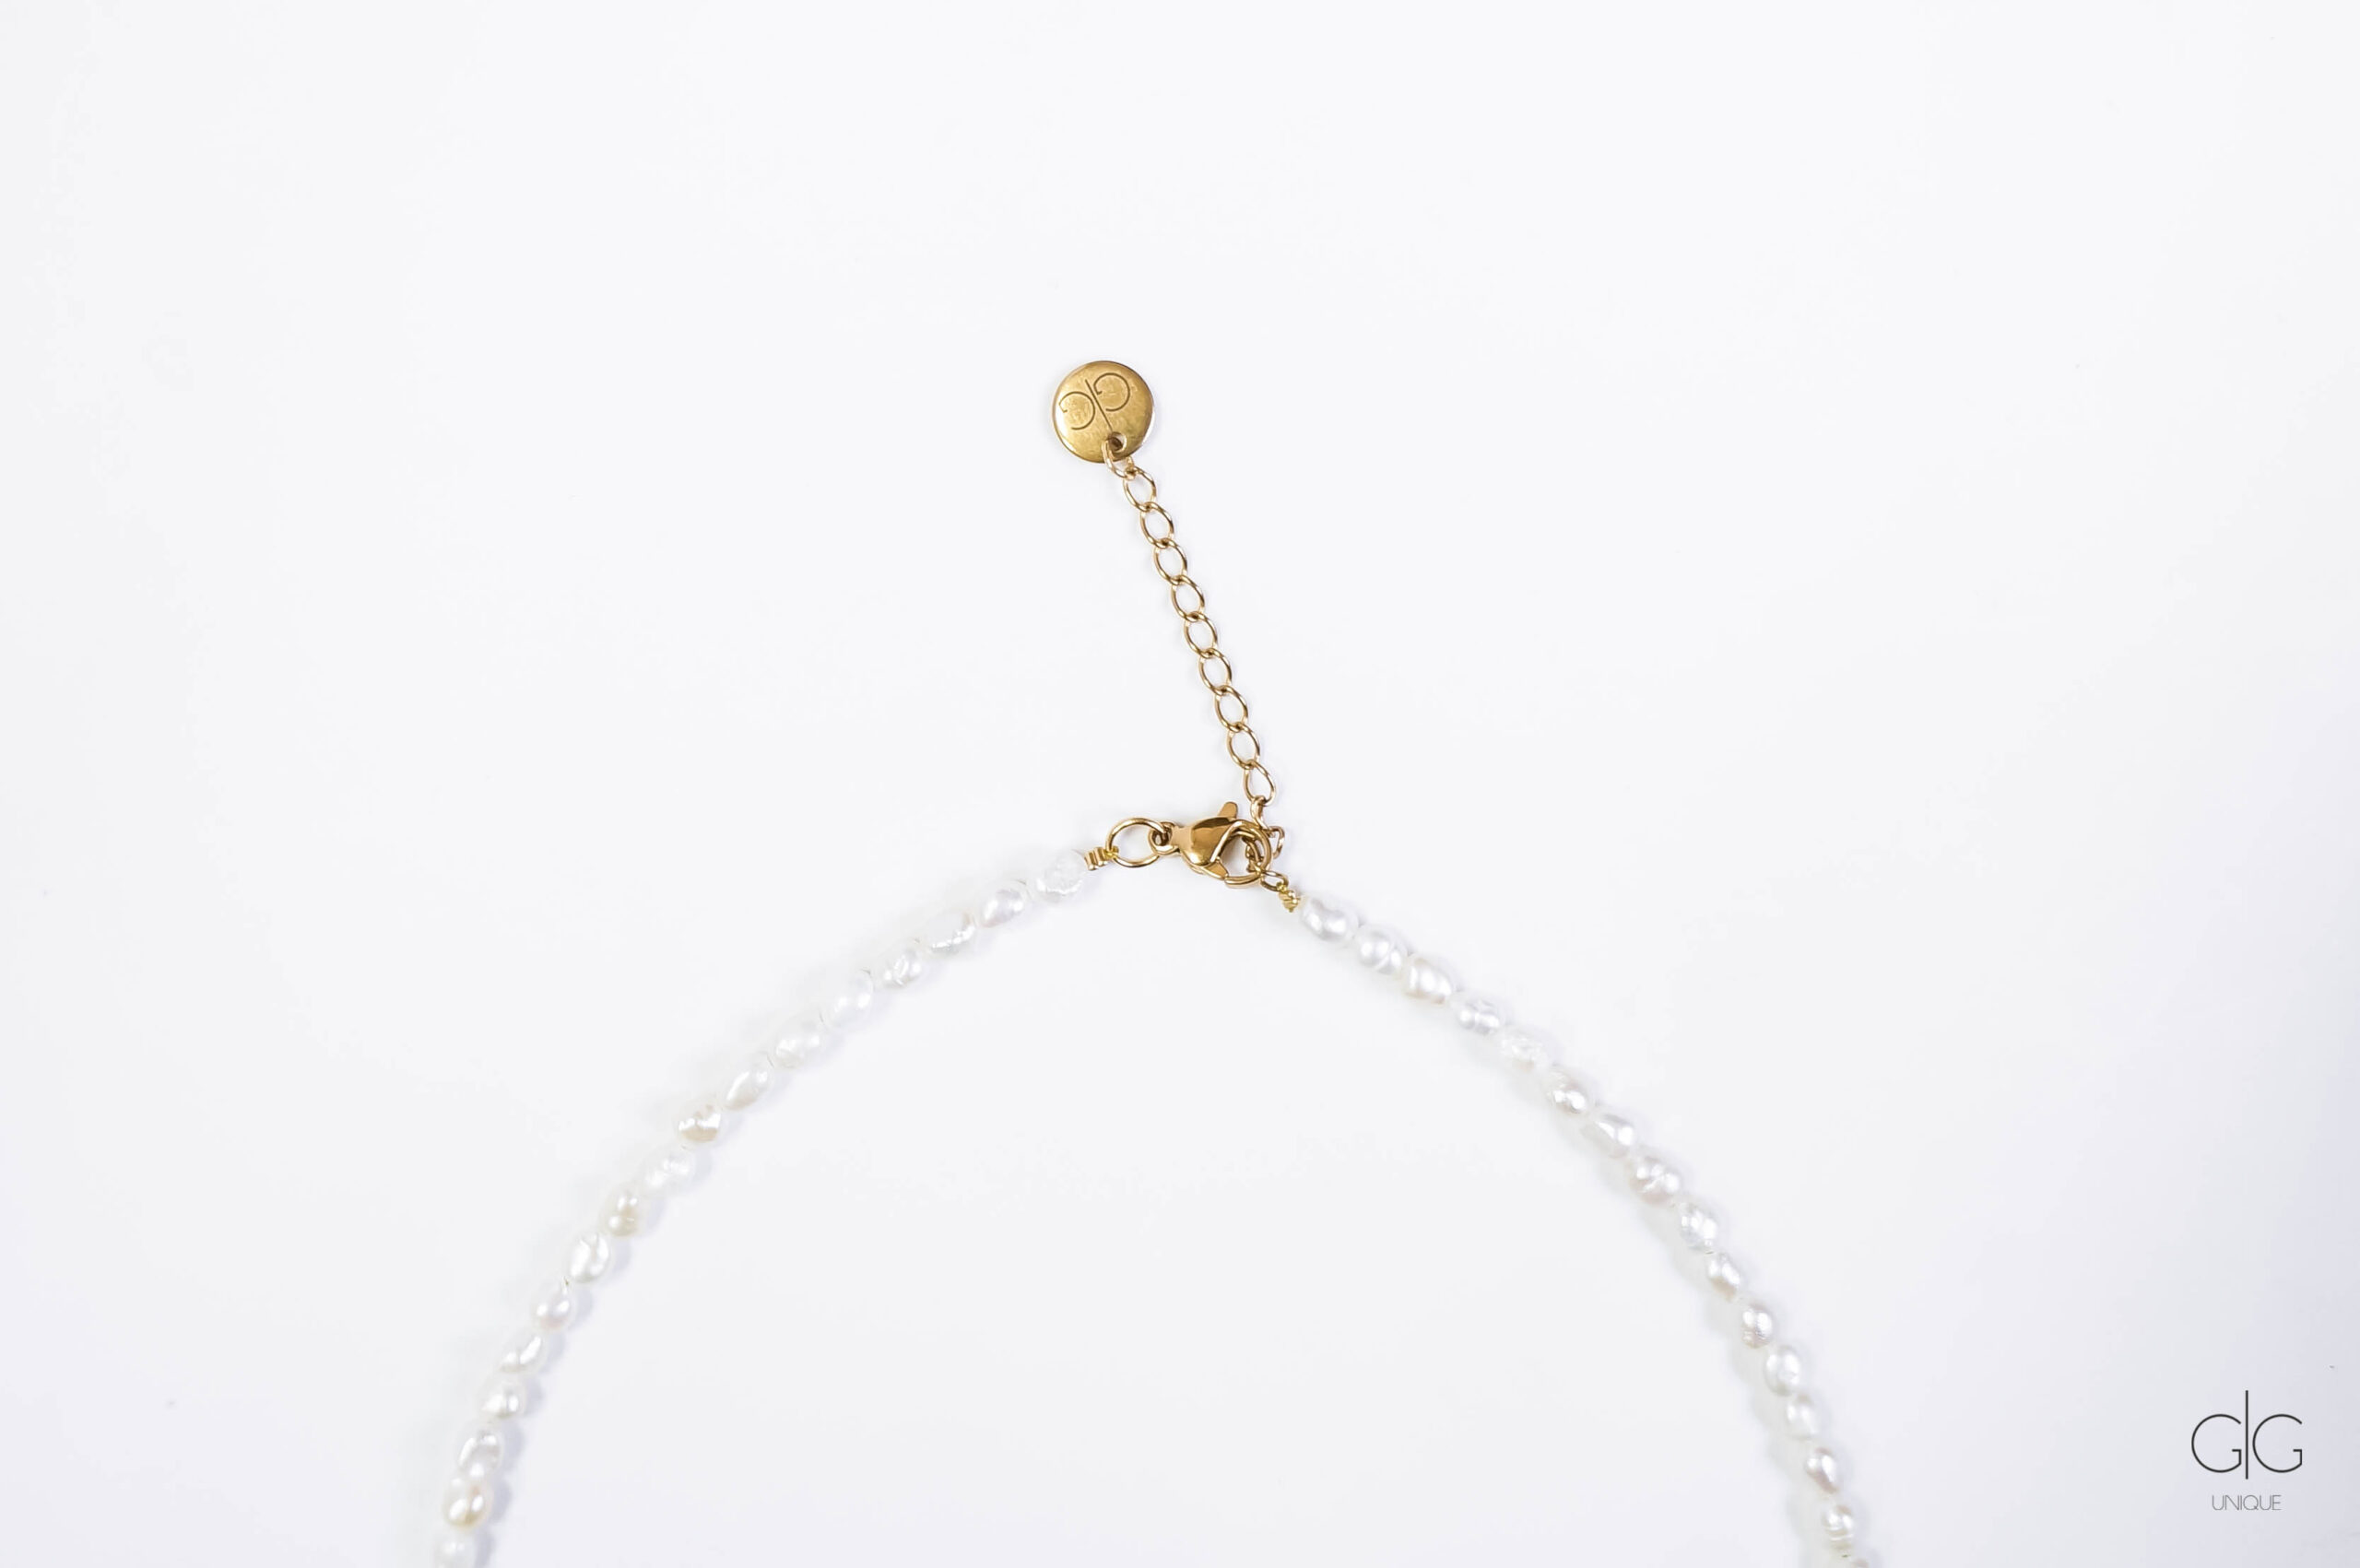 Pearl necklace with mini zircon pendant